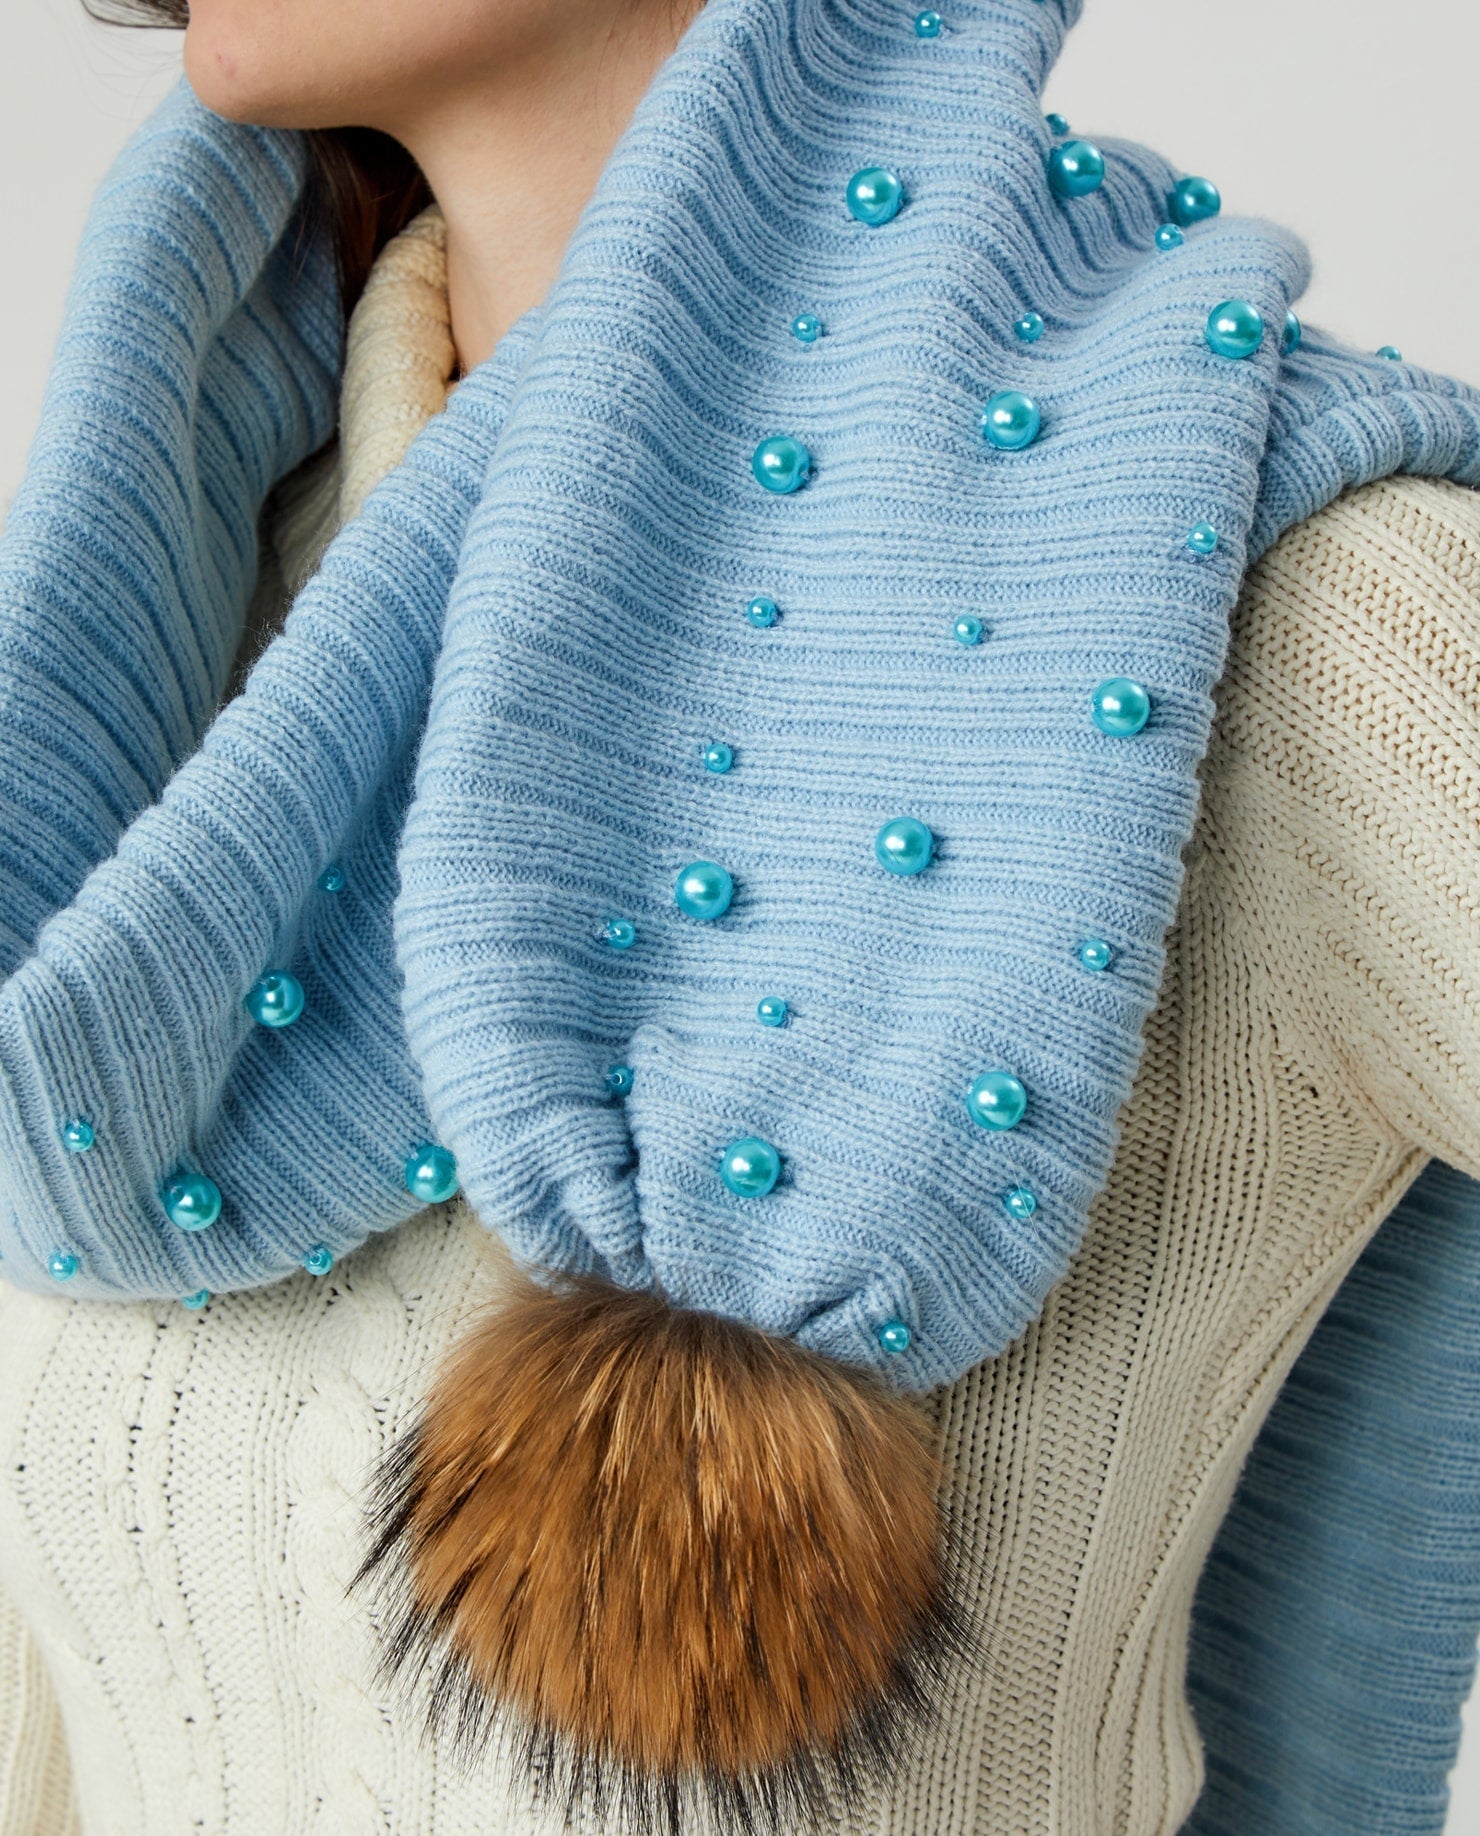 Foulard Adulte Doublé Pompons | Adult Poms Knit Scarf PERLES BABY BLUE - Mpompon